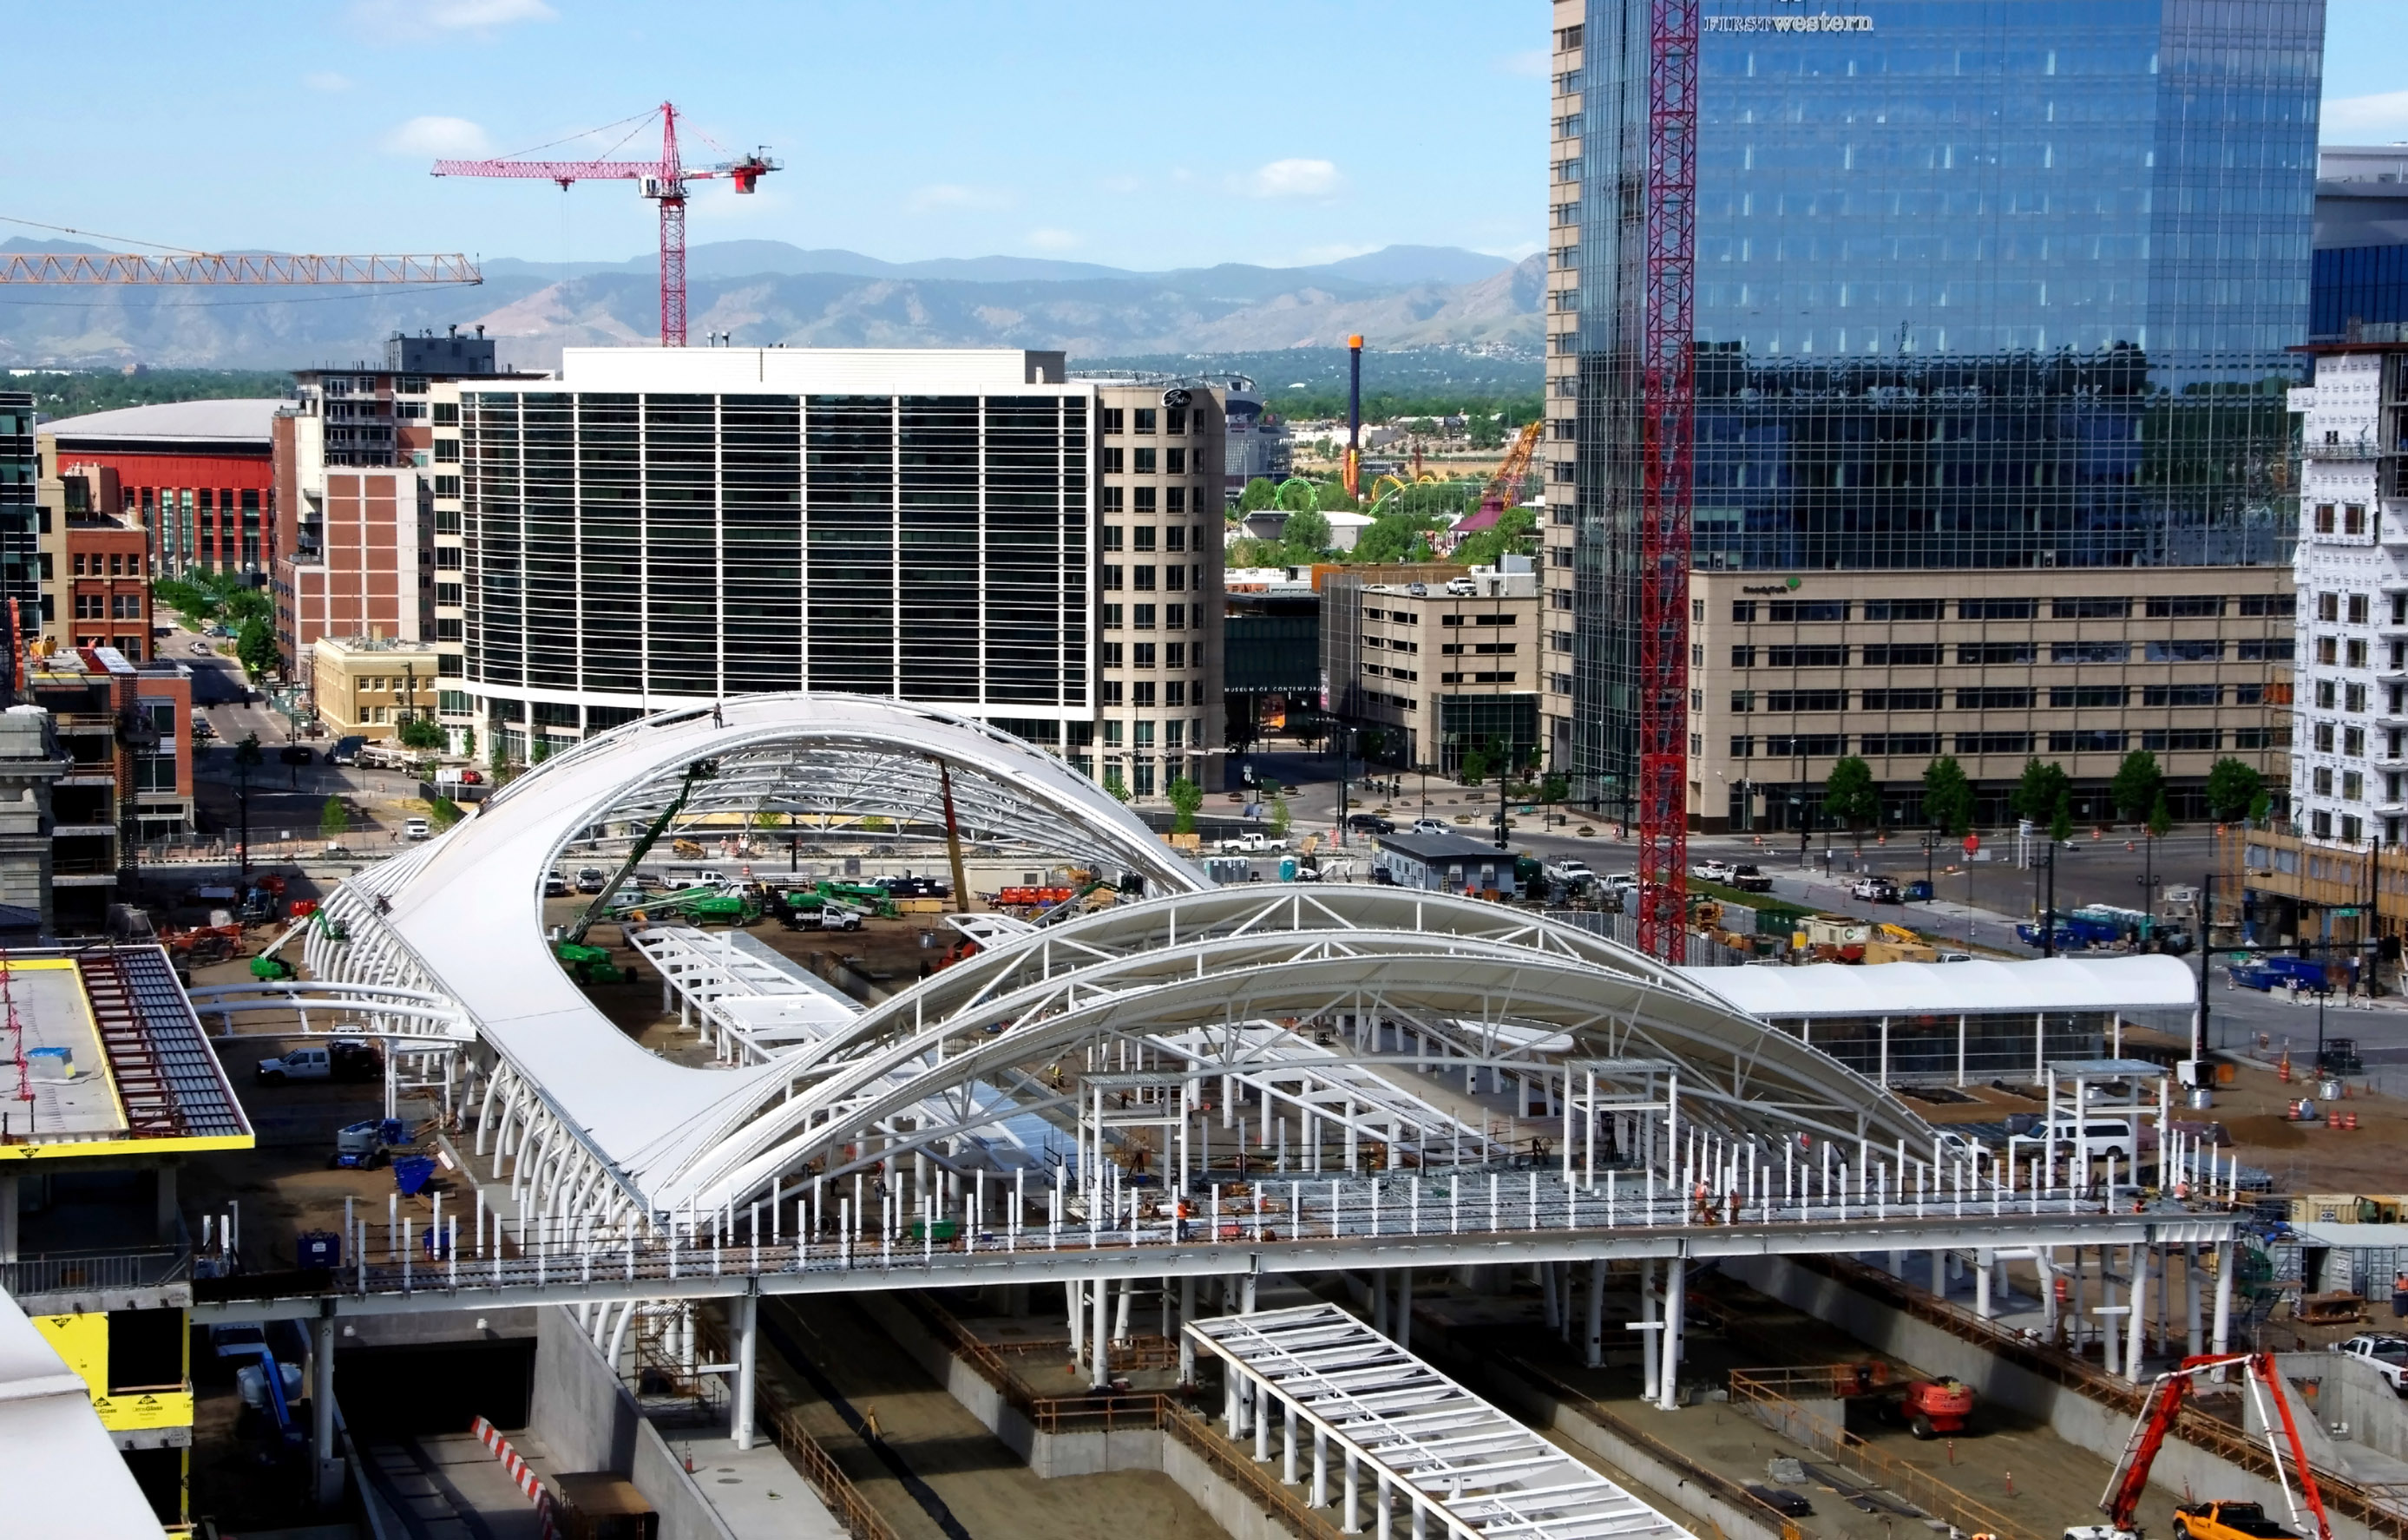 Denver Union Station Pedestrian Bridge and Equipment Canopy